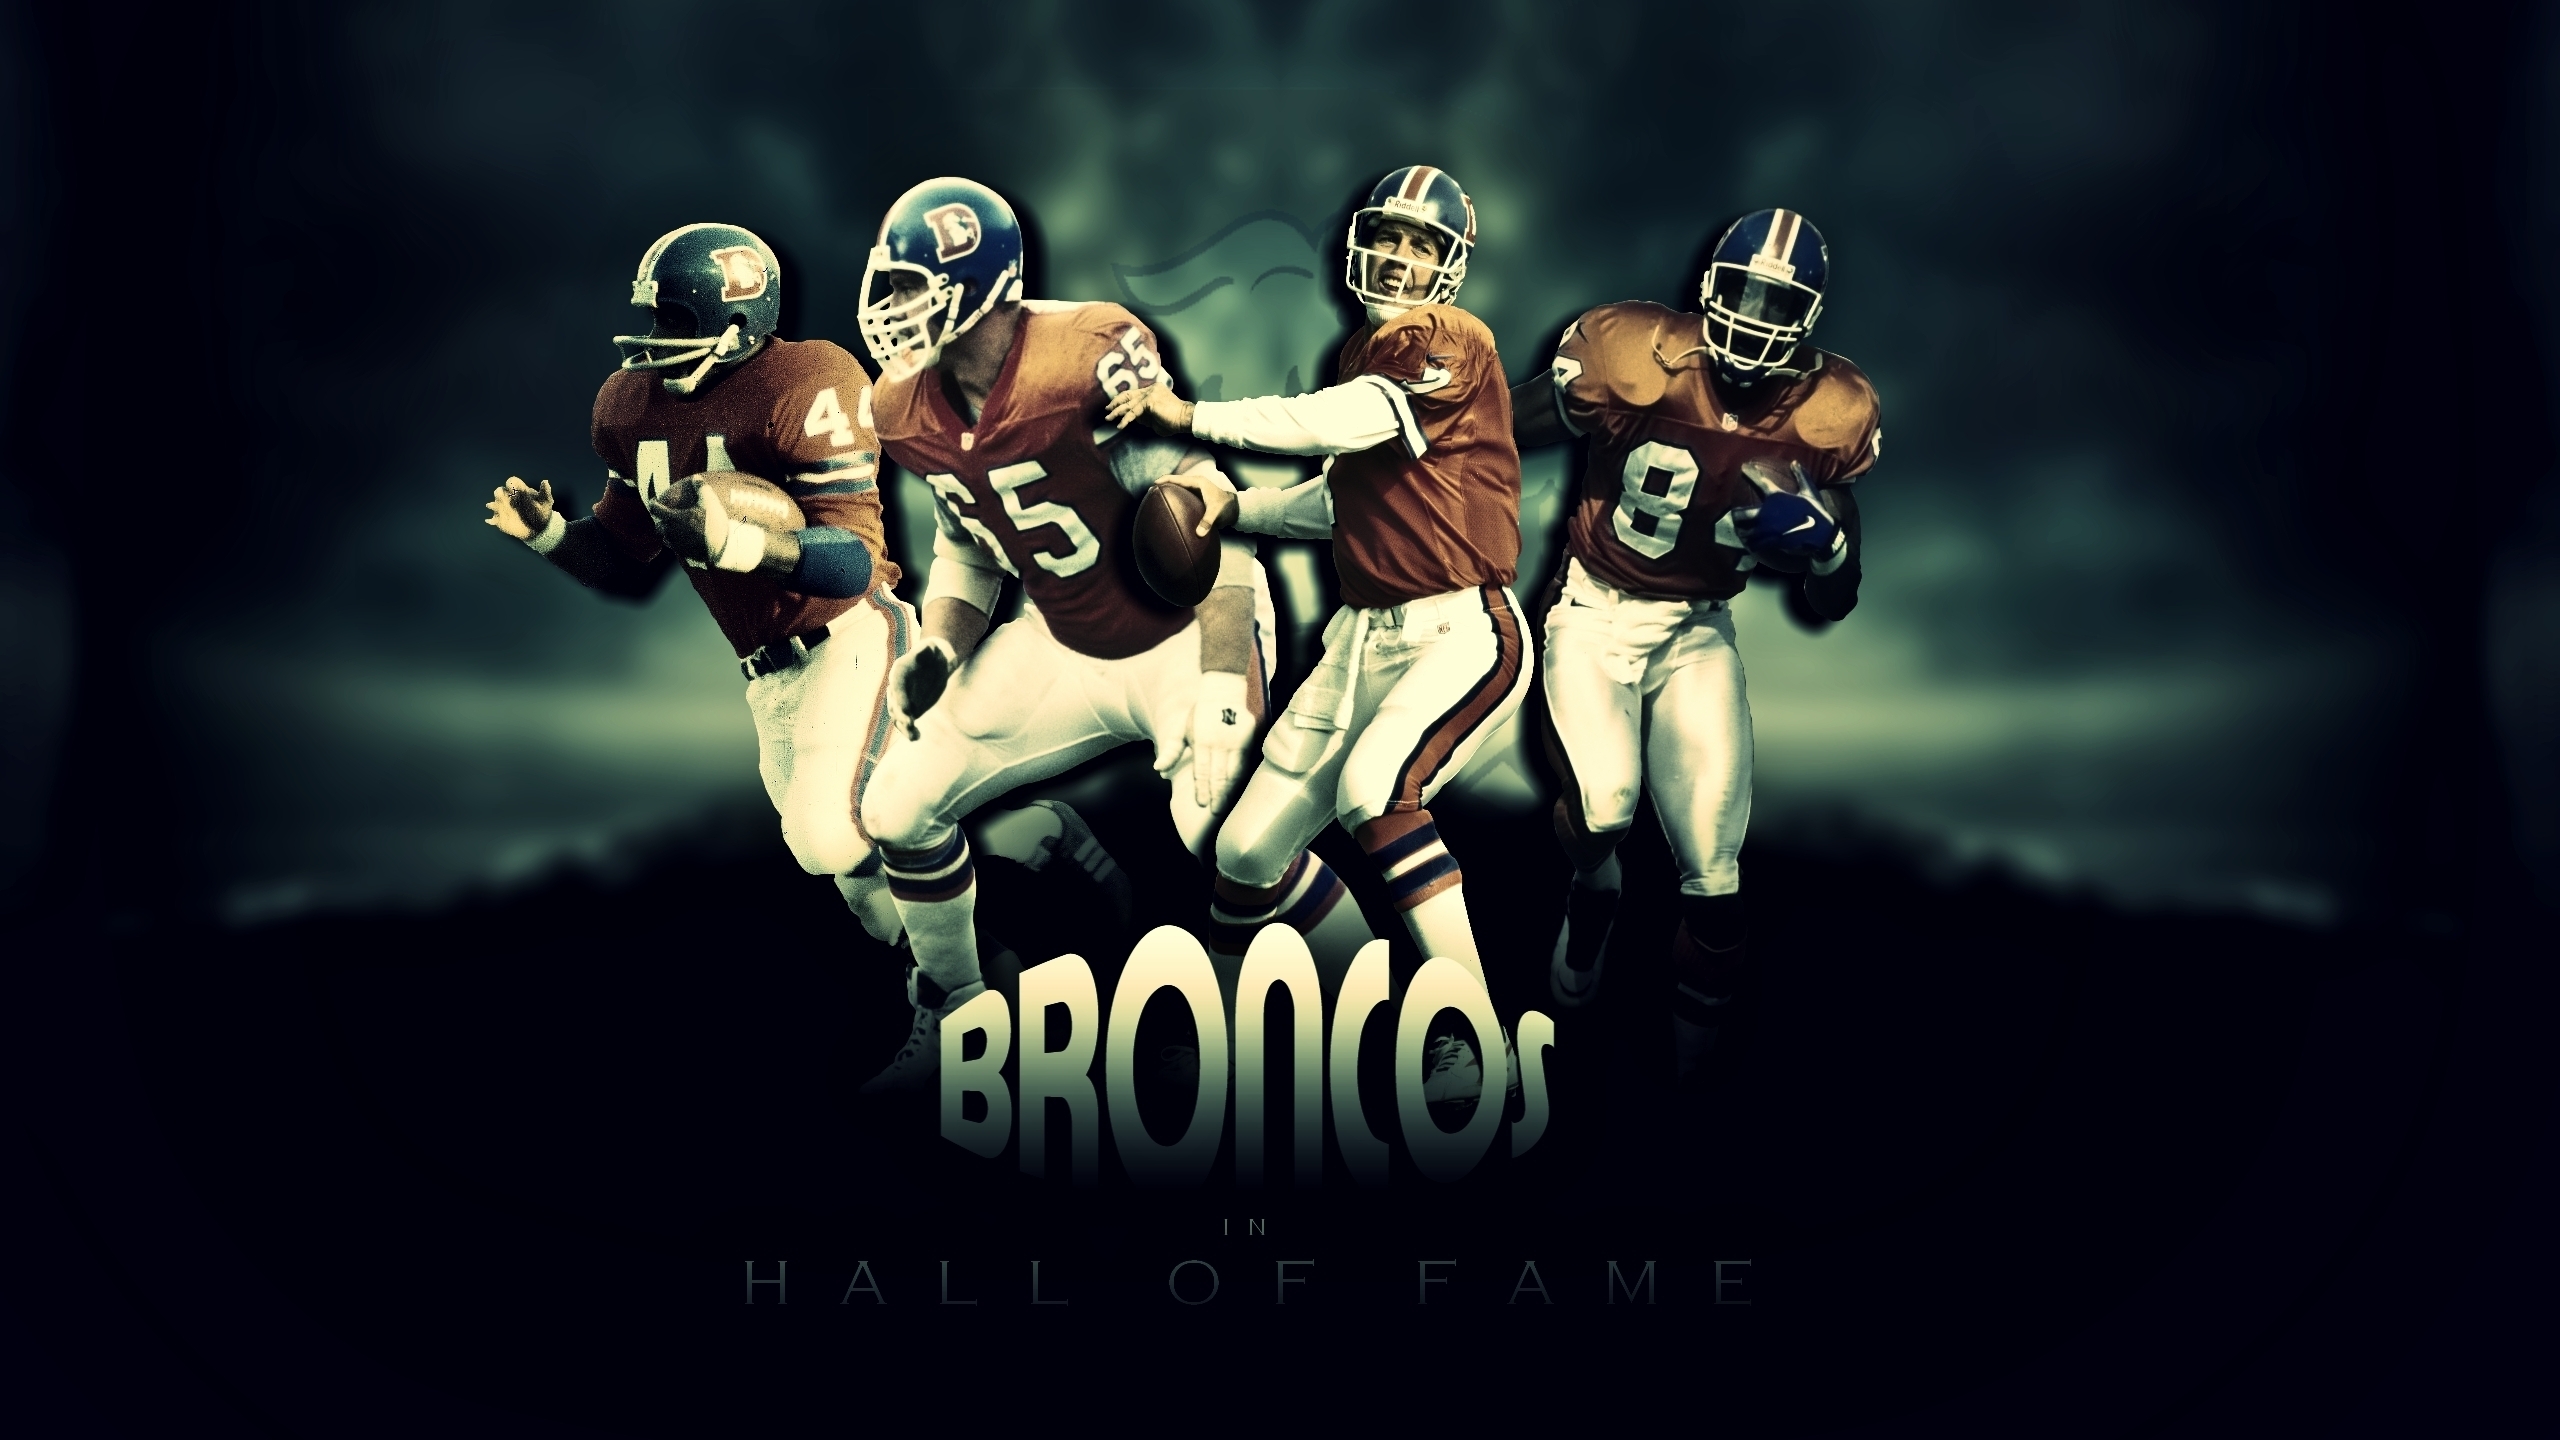 Broncos Hall of Fame for 2560x1440 HDTV resolution